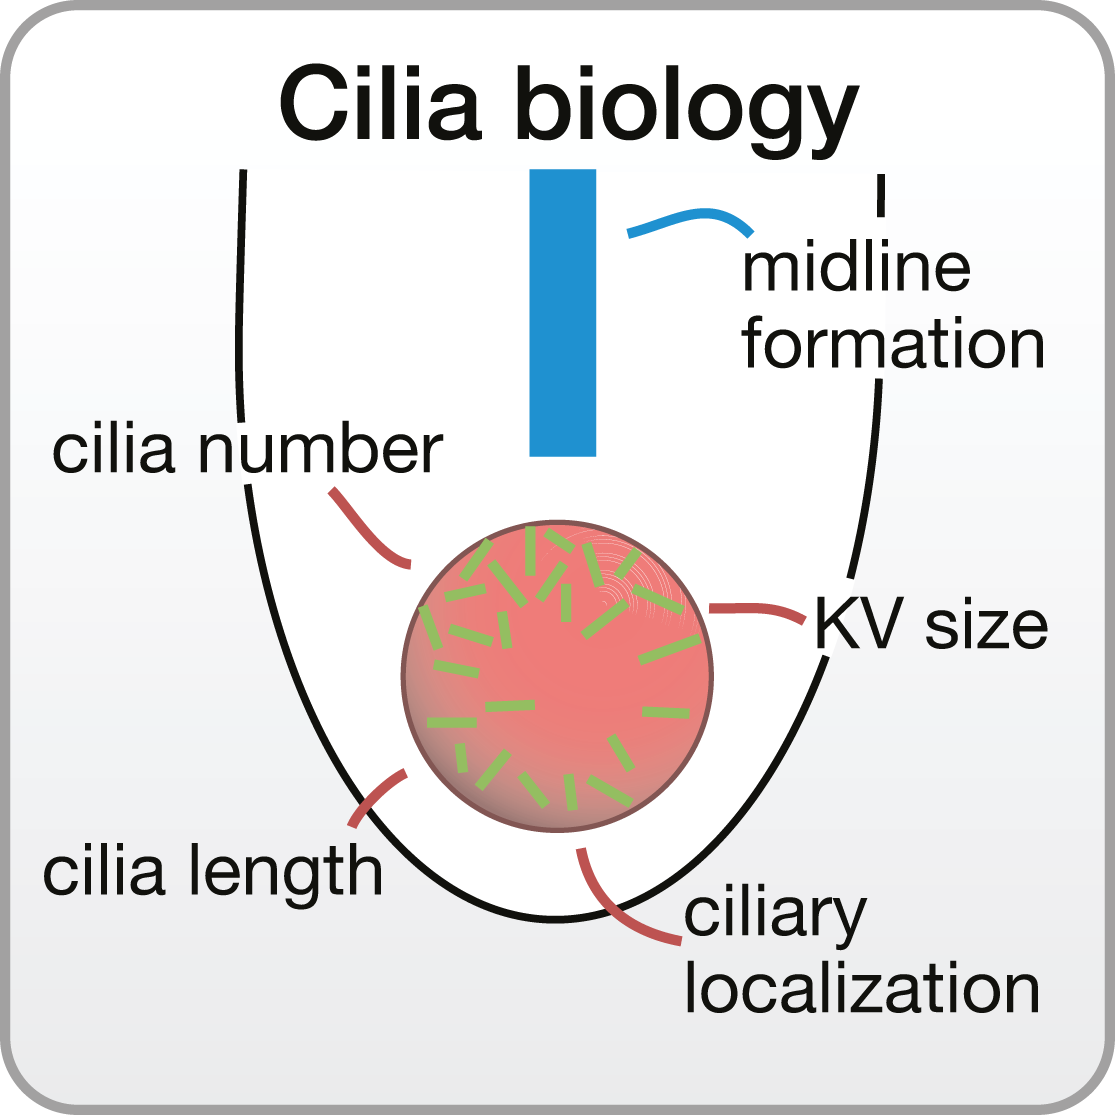 Cilia biology